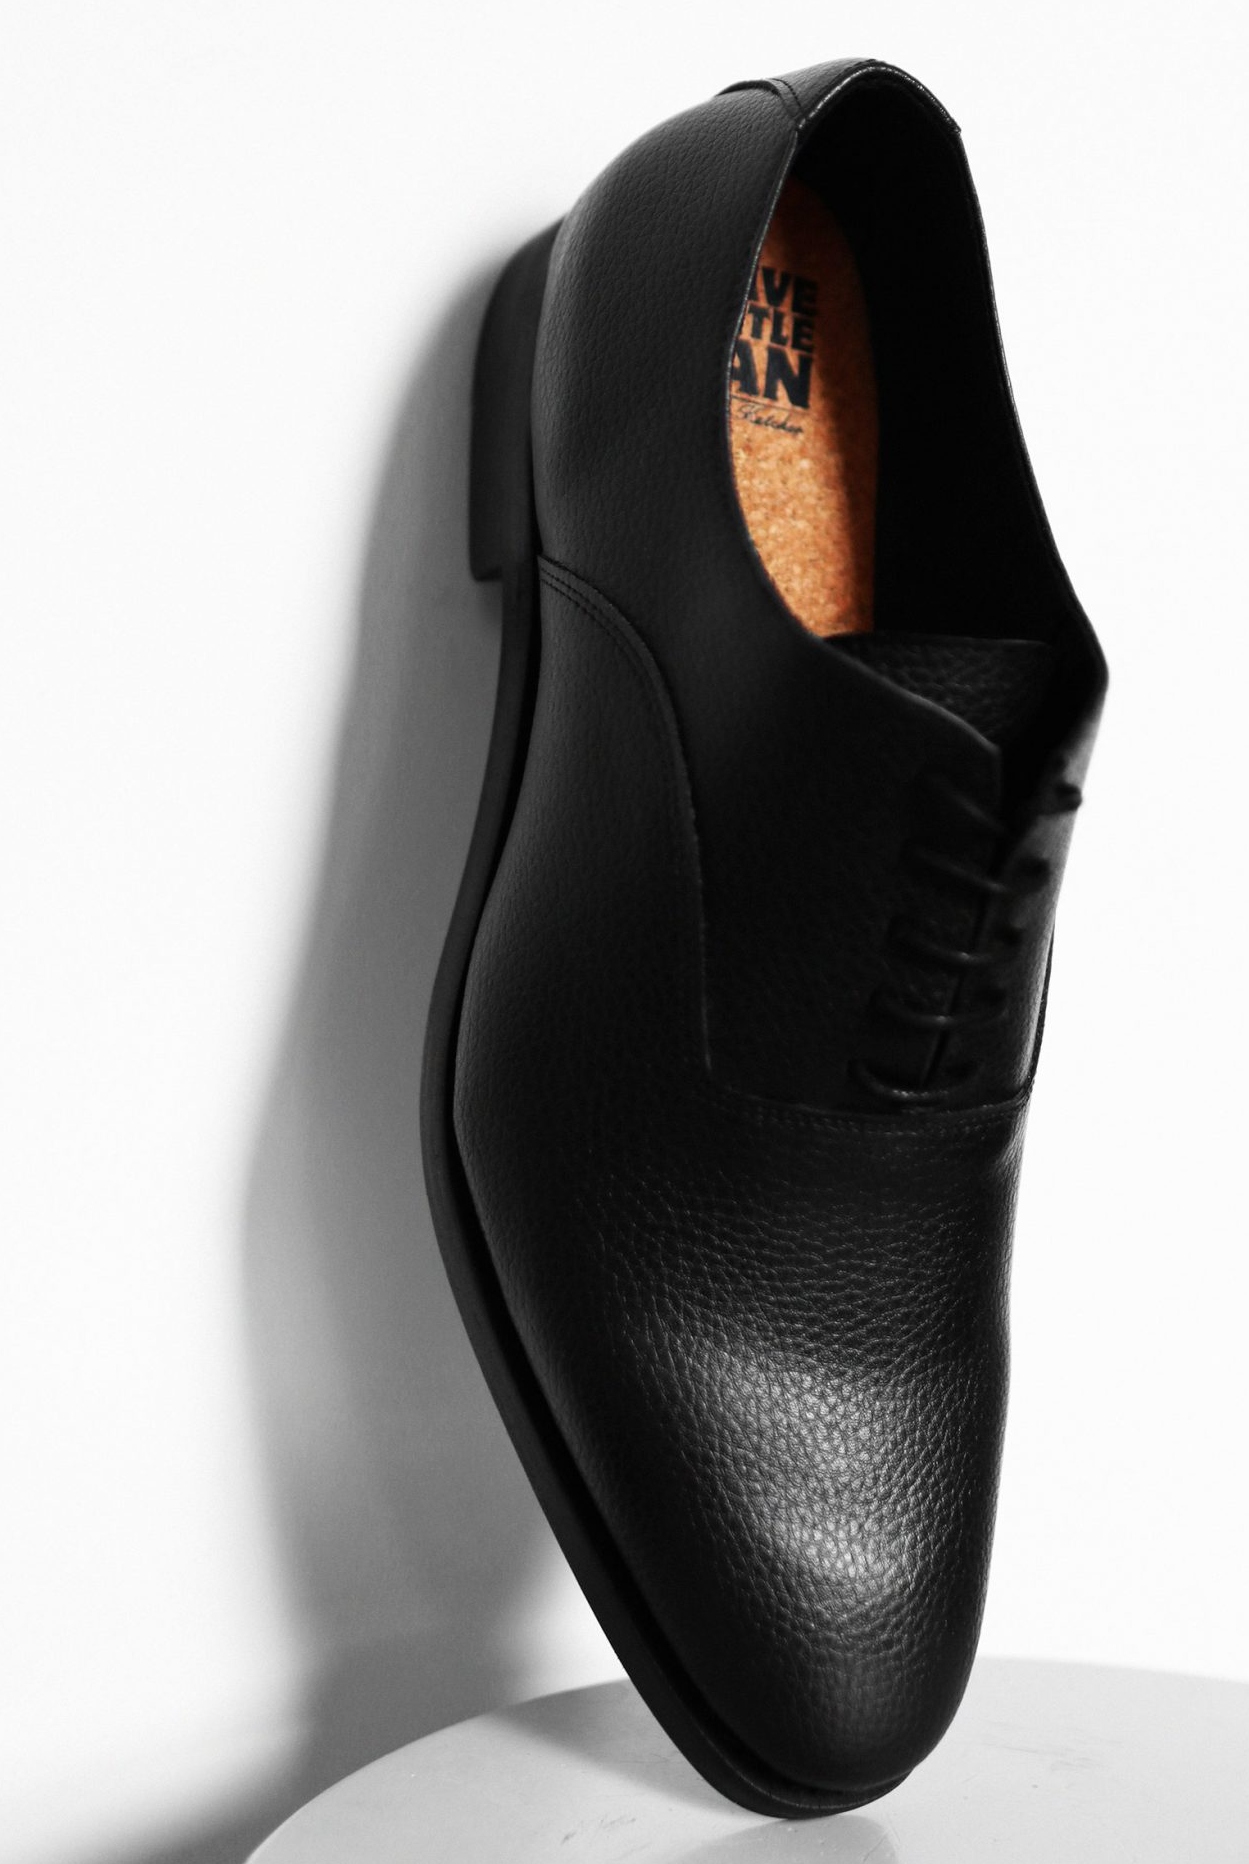 A vegan leather shoe